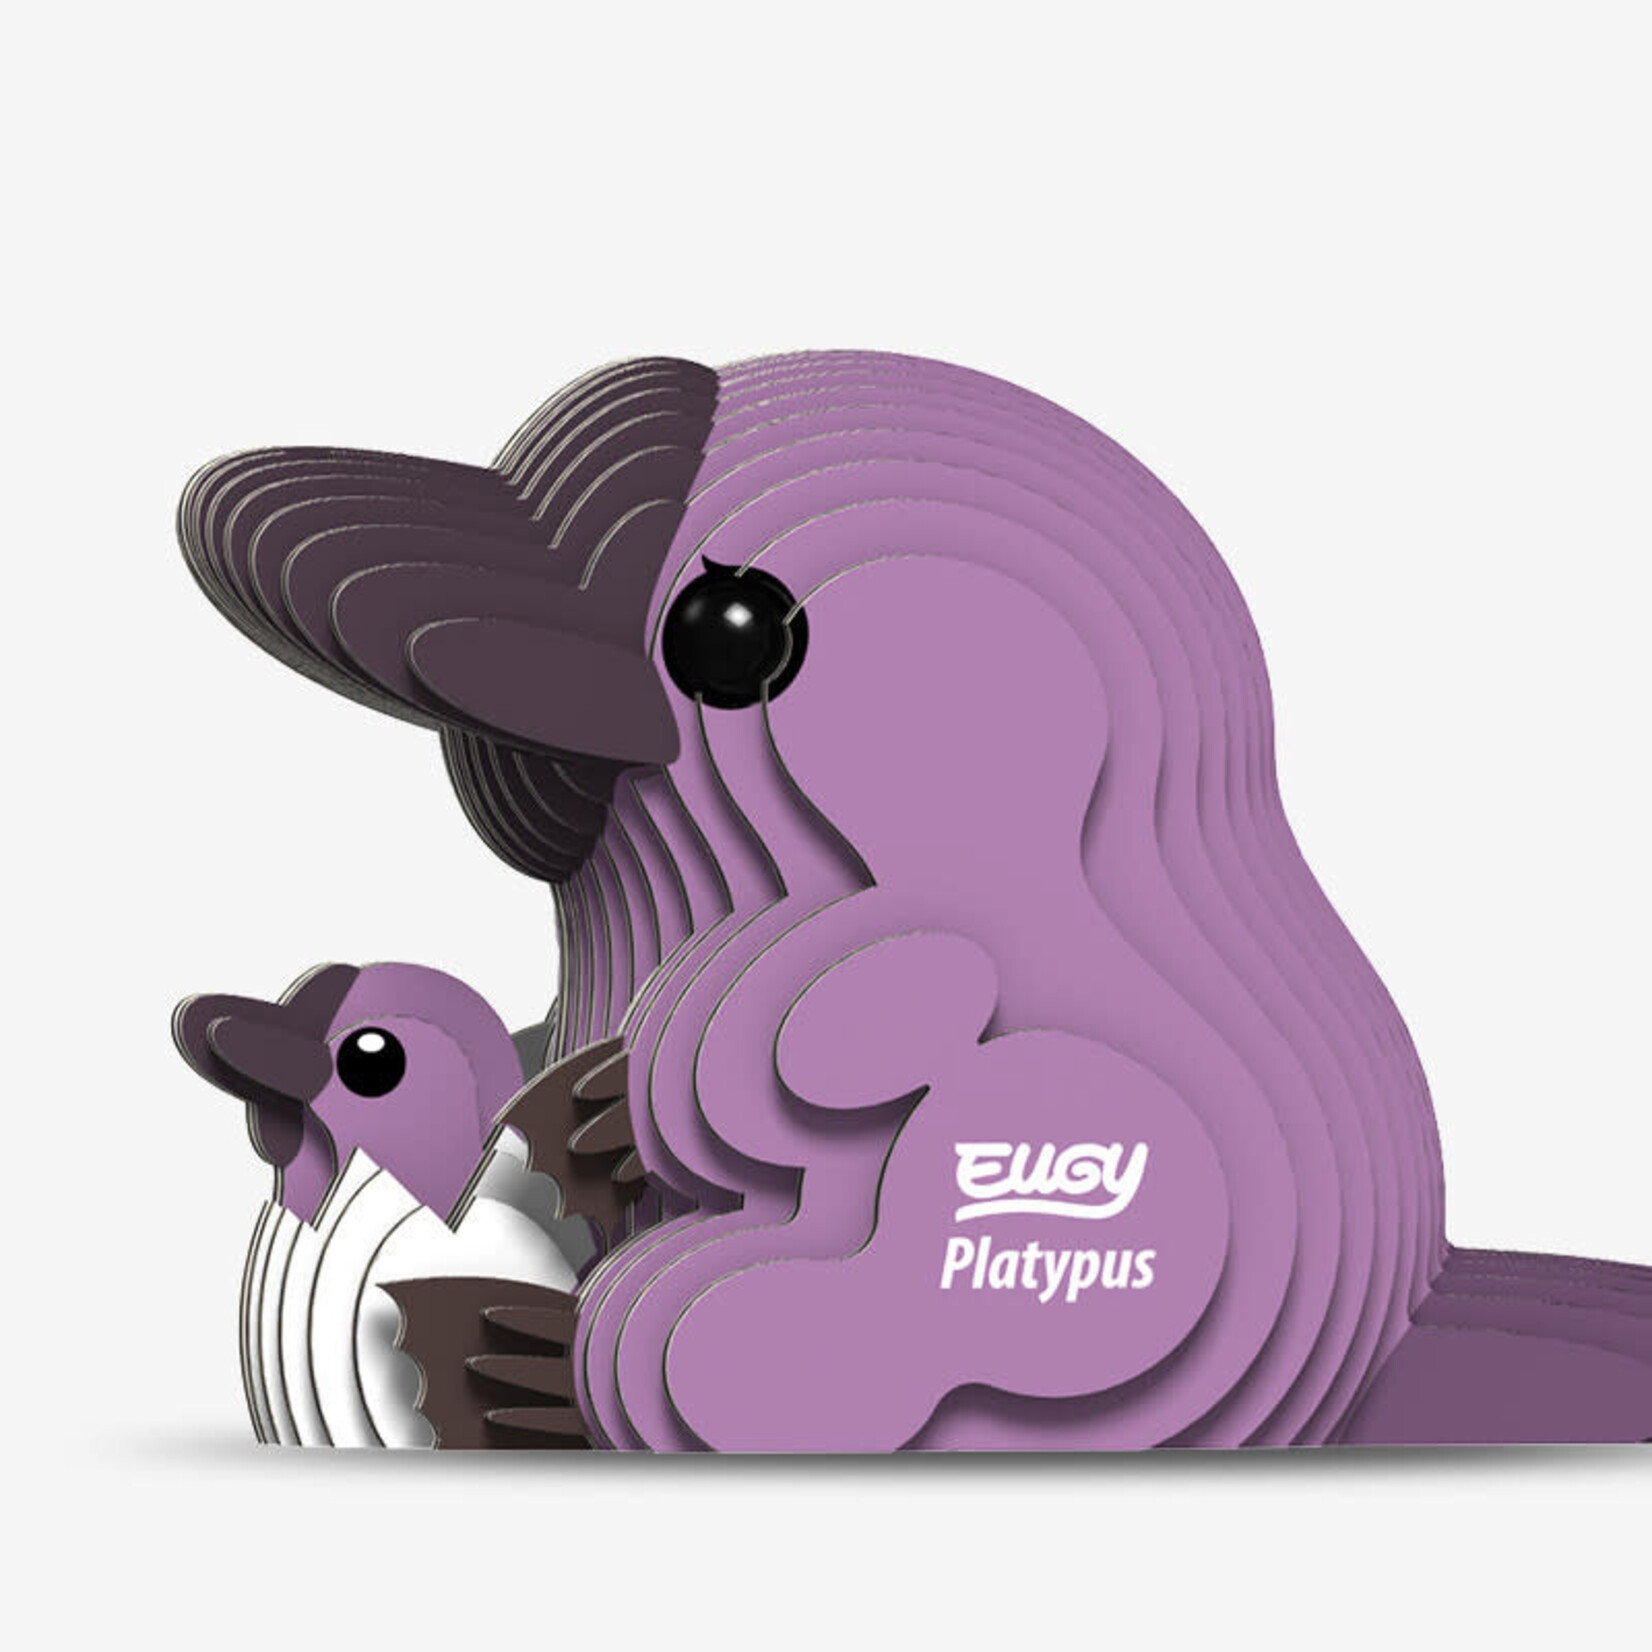 Platypus Eugy 3d Collectable Puzzle